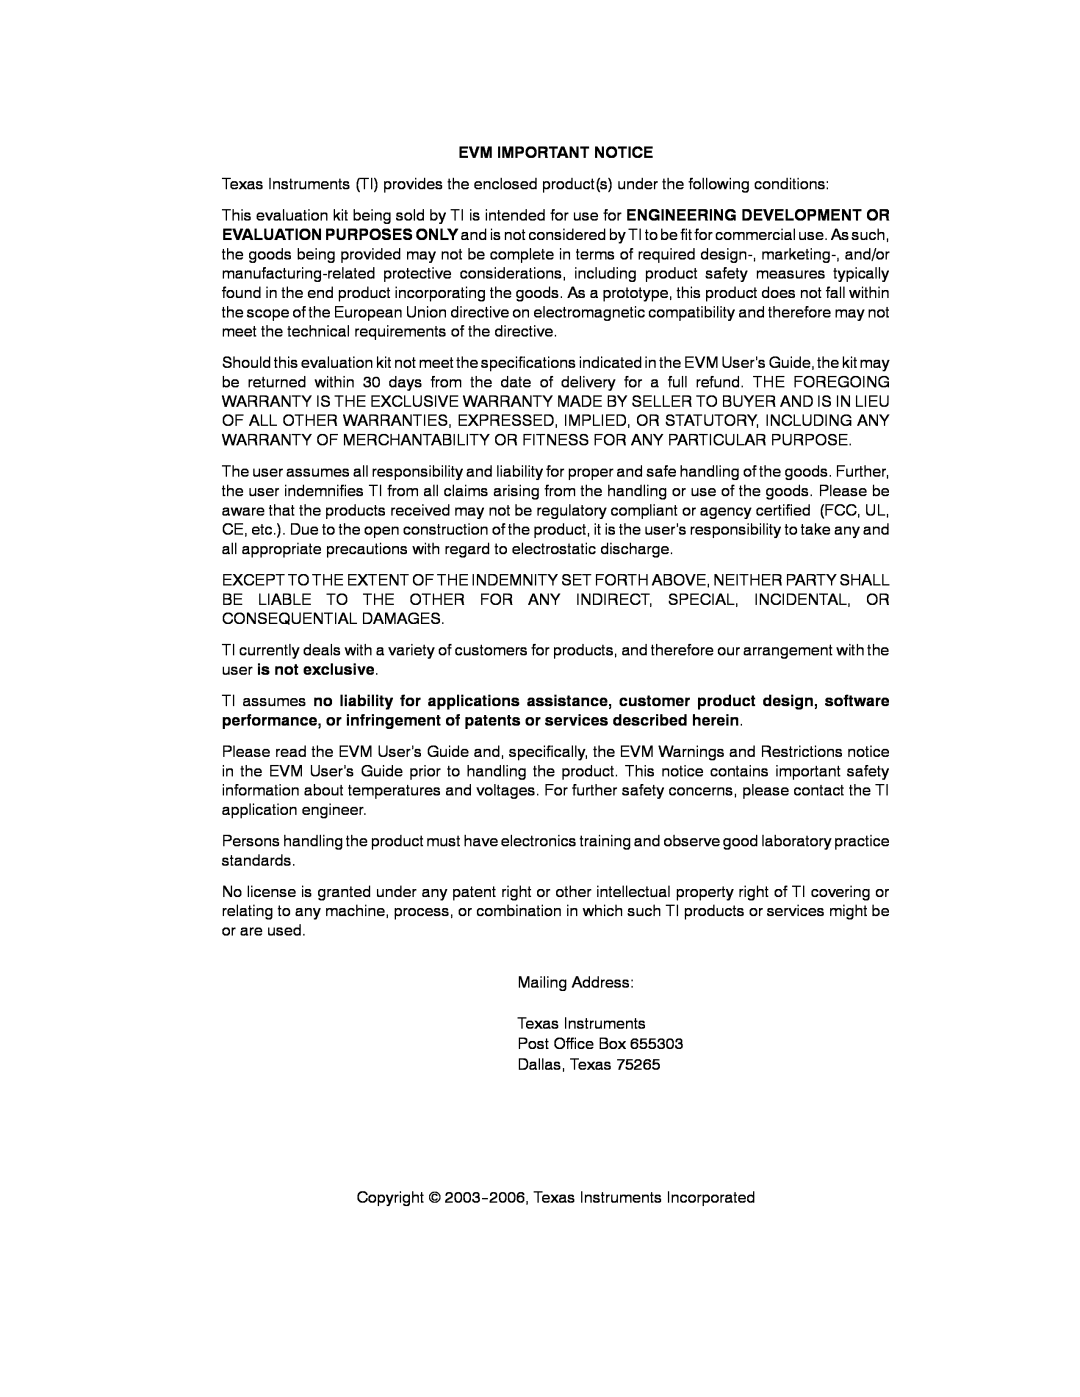 Texas Instruments UCC2891 manual Evm Important Notice 